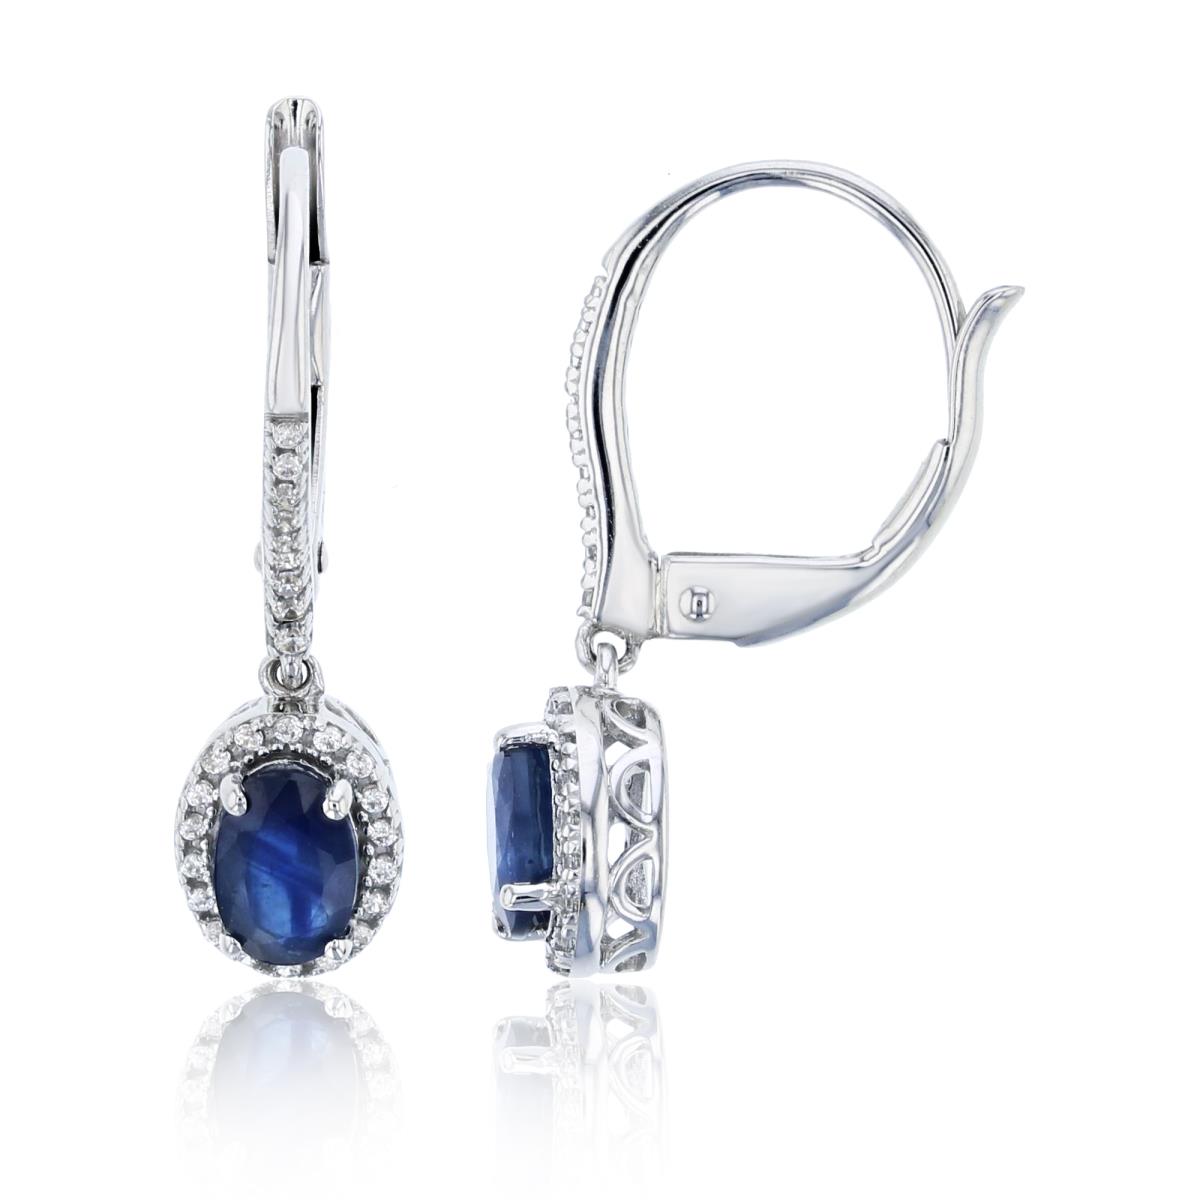 10K White Gold 0.165cttw Rnd Diamonds & 6x4mm Oval Halo Sapphire Dangling Lever Back Earrings